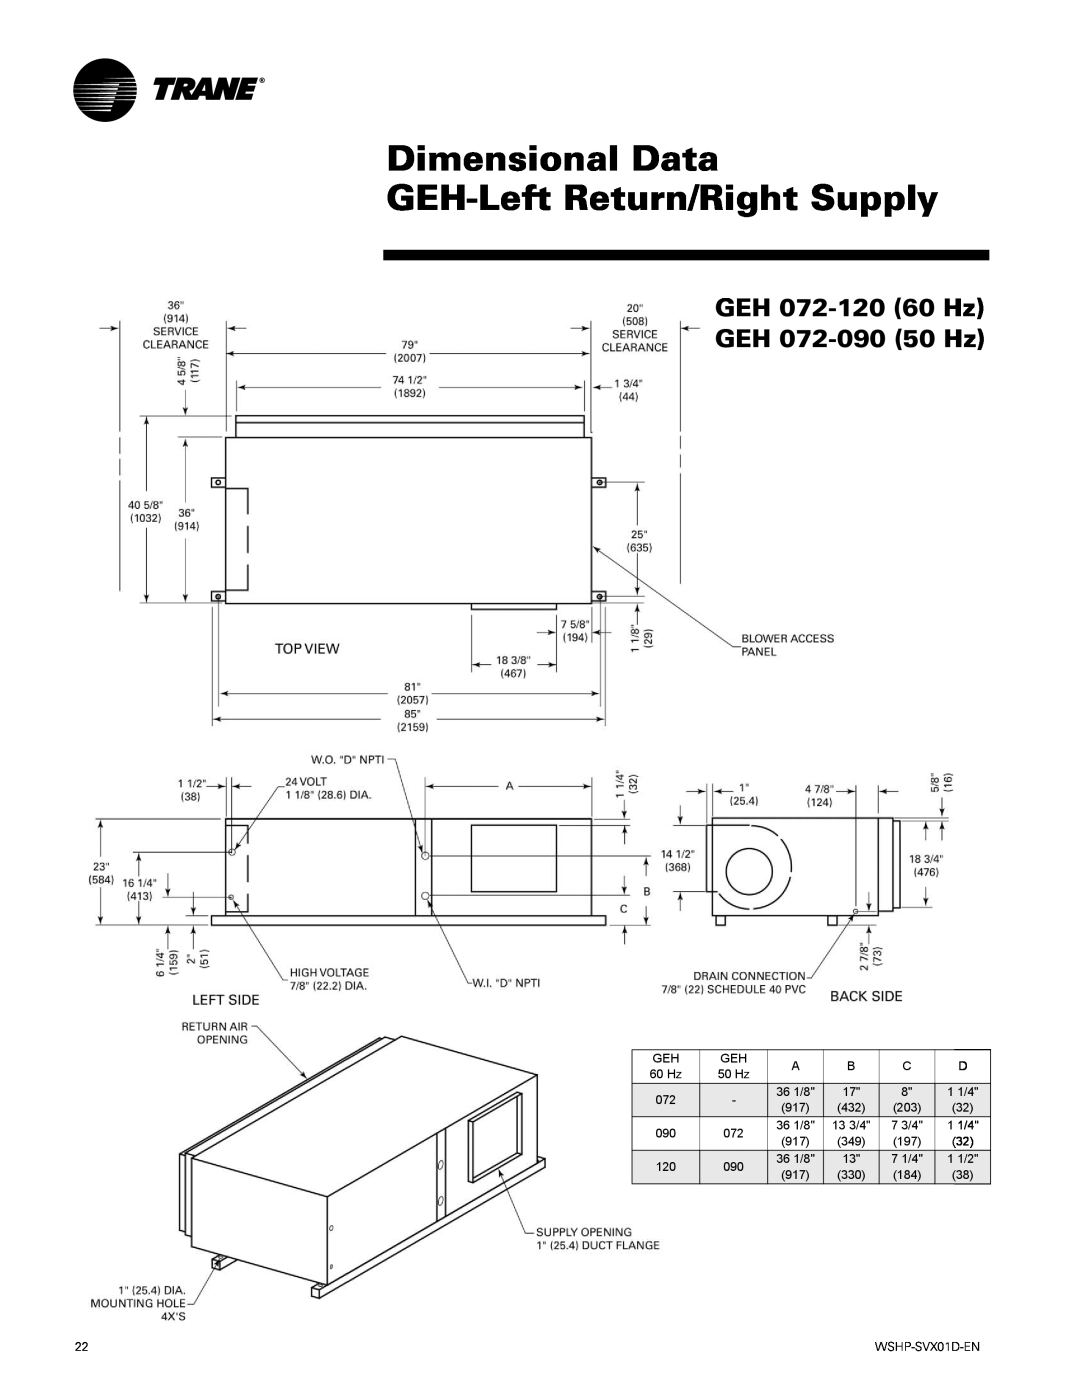 Trane GEV manual Dimensional Data GEH-LeftReturn/Right Supply, GEH 072-12060 Hz GEH 072-09050 Hz 